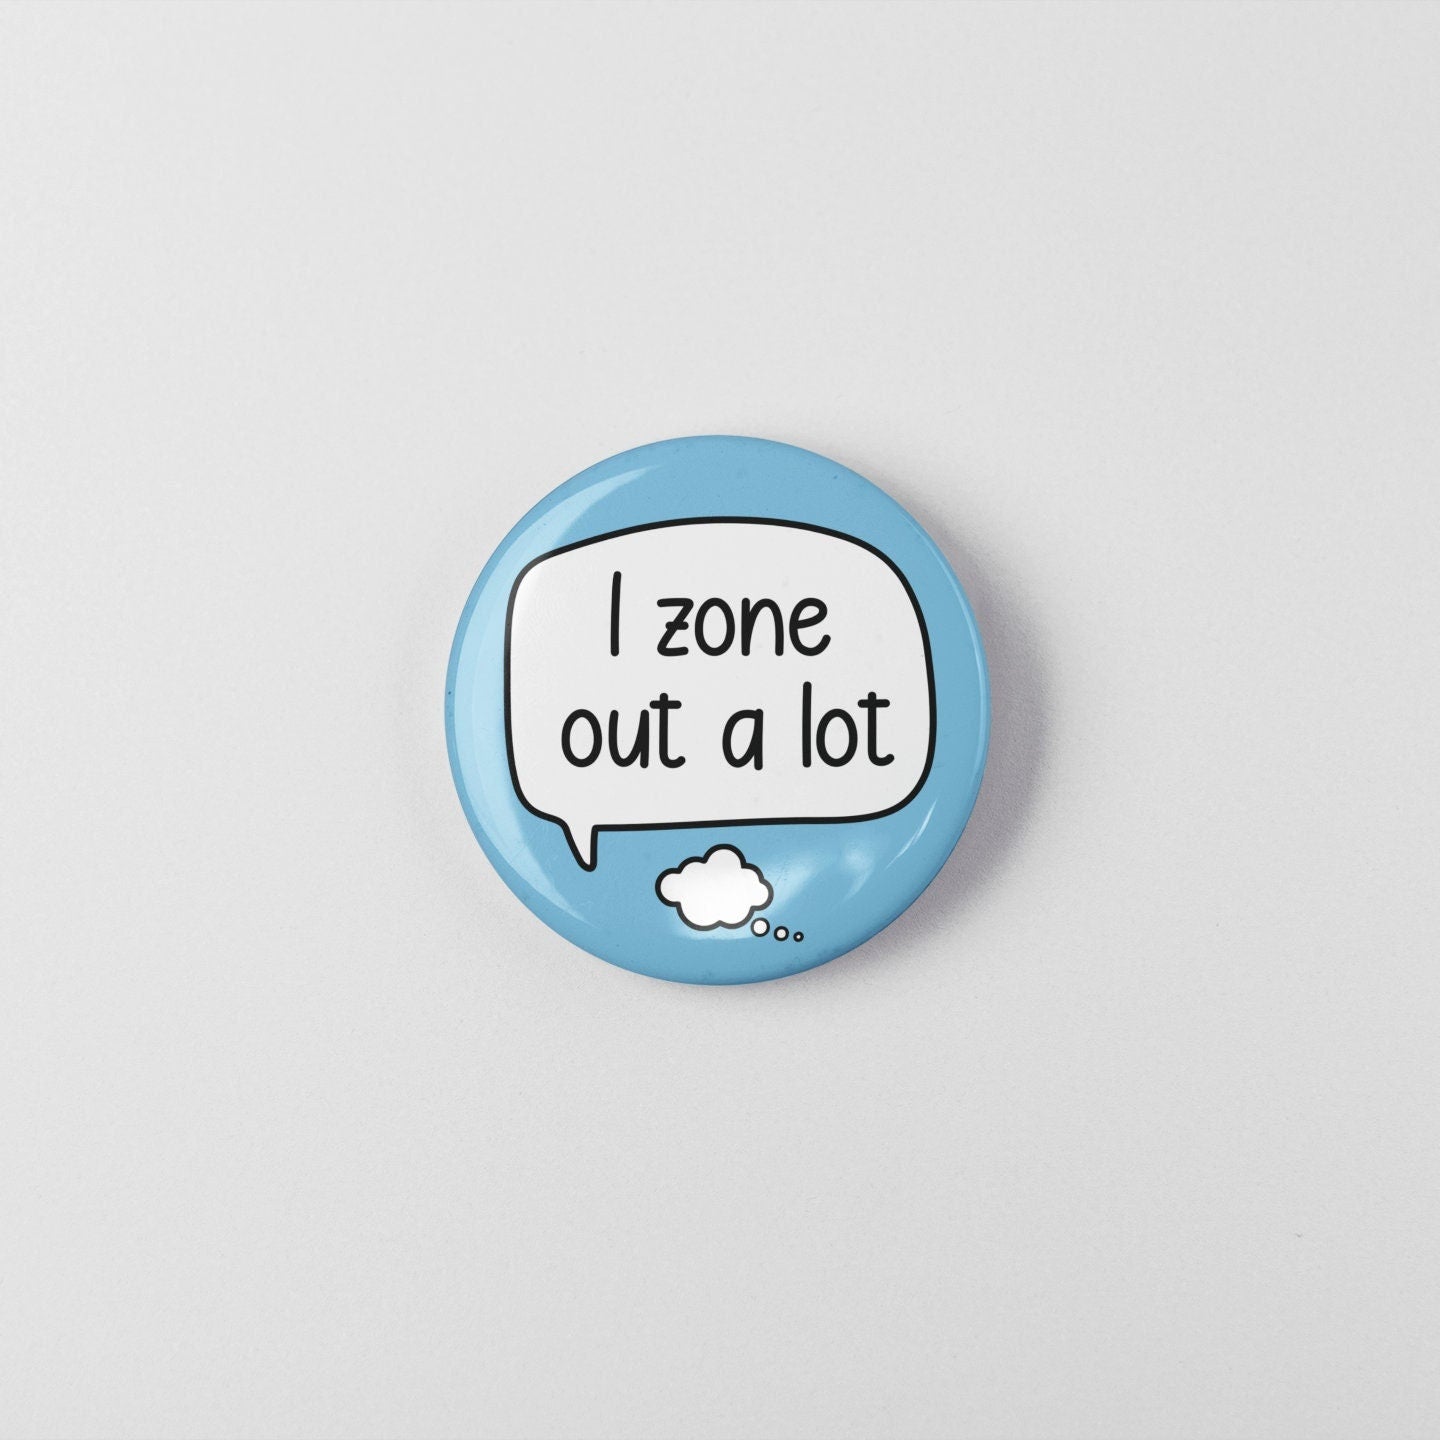 I Zone Out A Lot - Badge Pin | Communication Pin - Daydreamer - ADHD